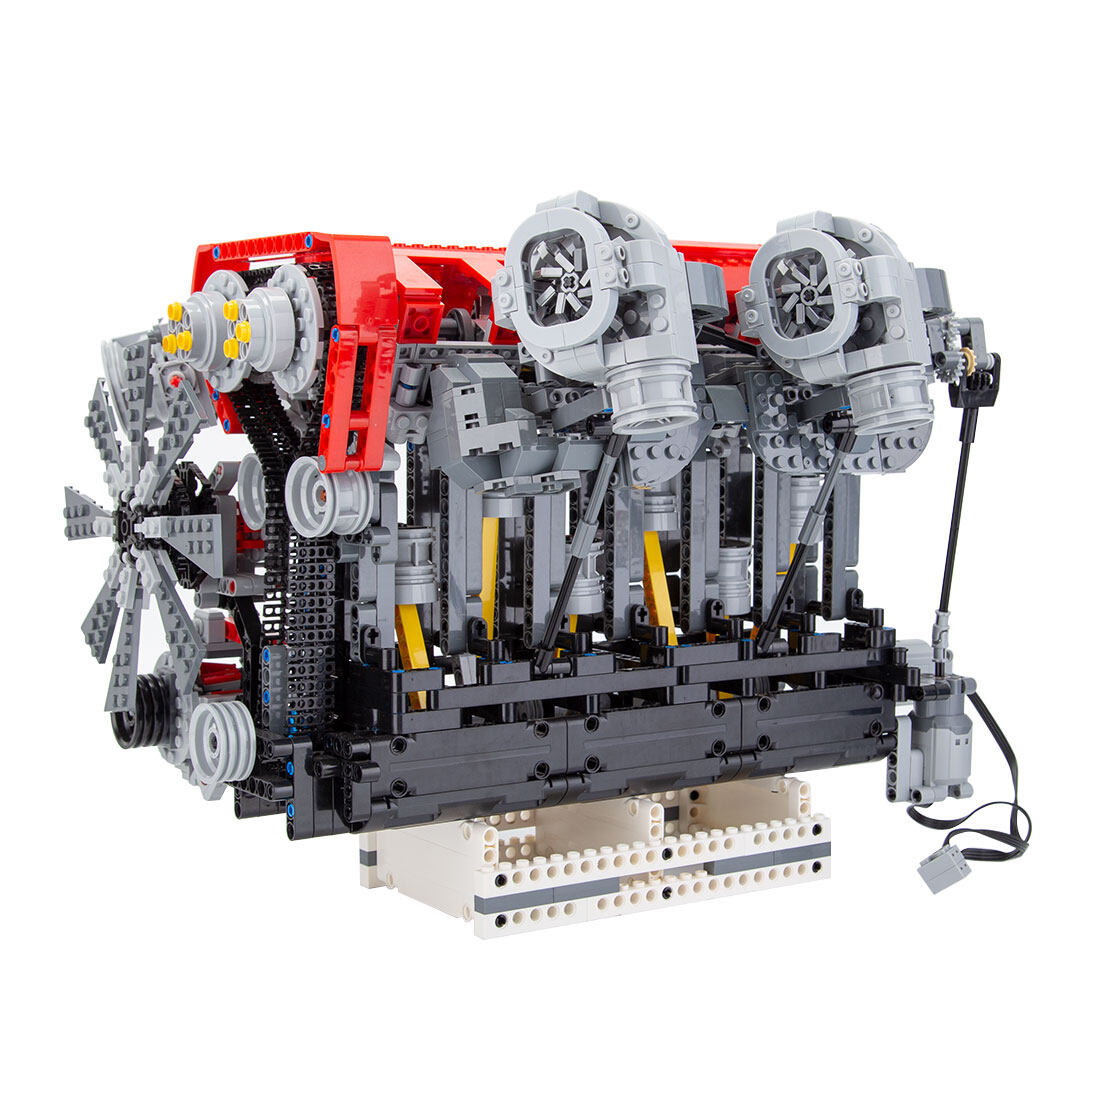 MOC RB-30 Six-Cylinder Four-Stroke Gasoline Engine Model Building Blocks Toy Set -1985PCS-Build Your Own L6 Engine enginediyshop